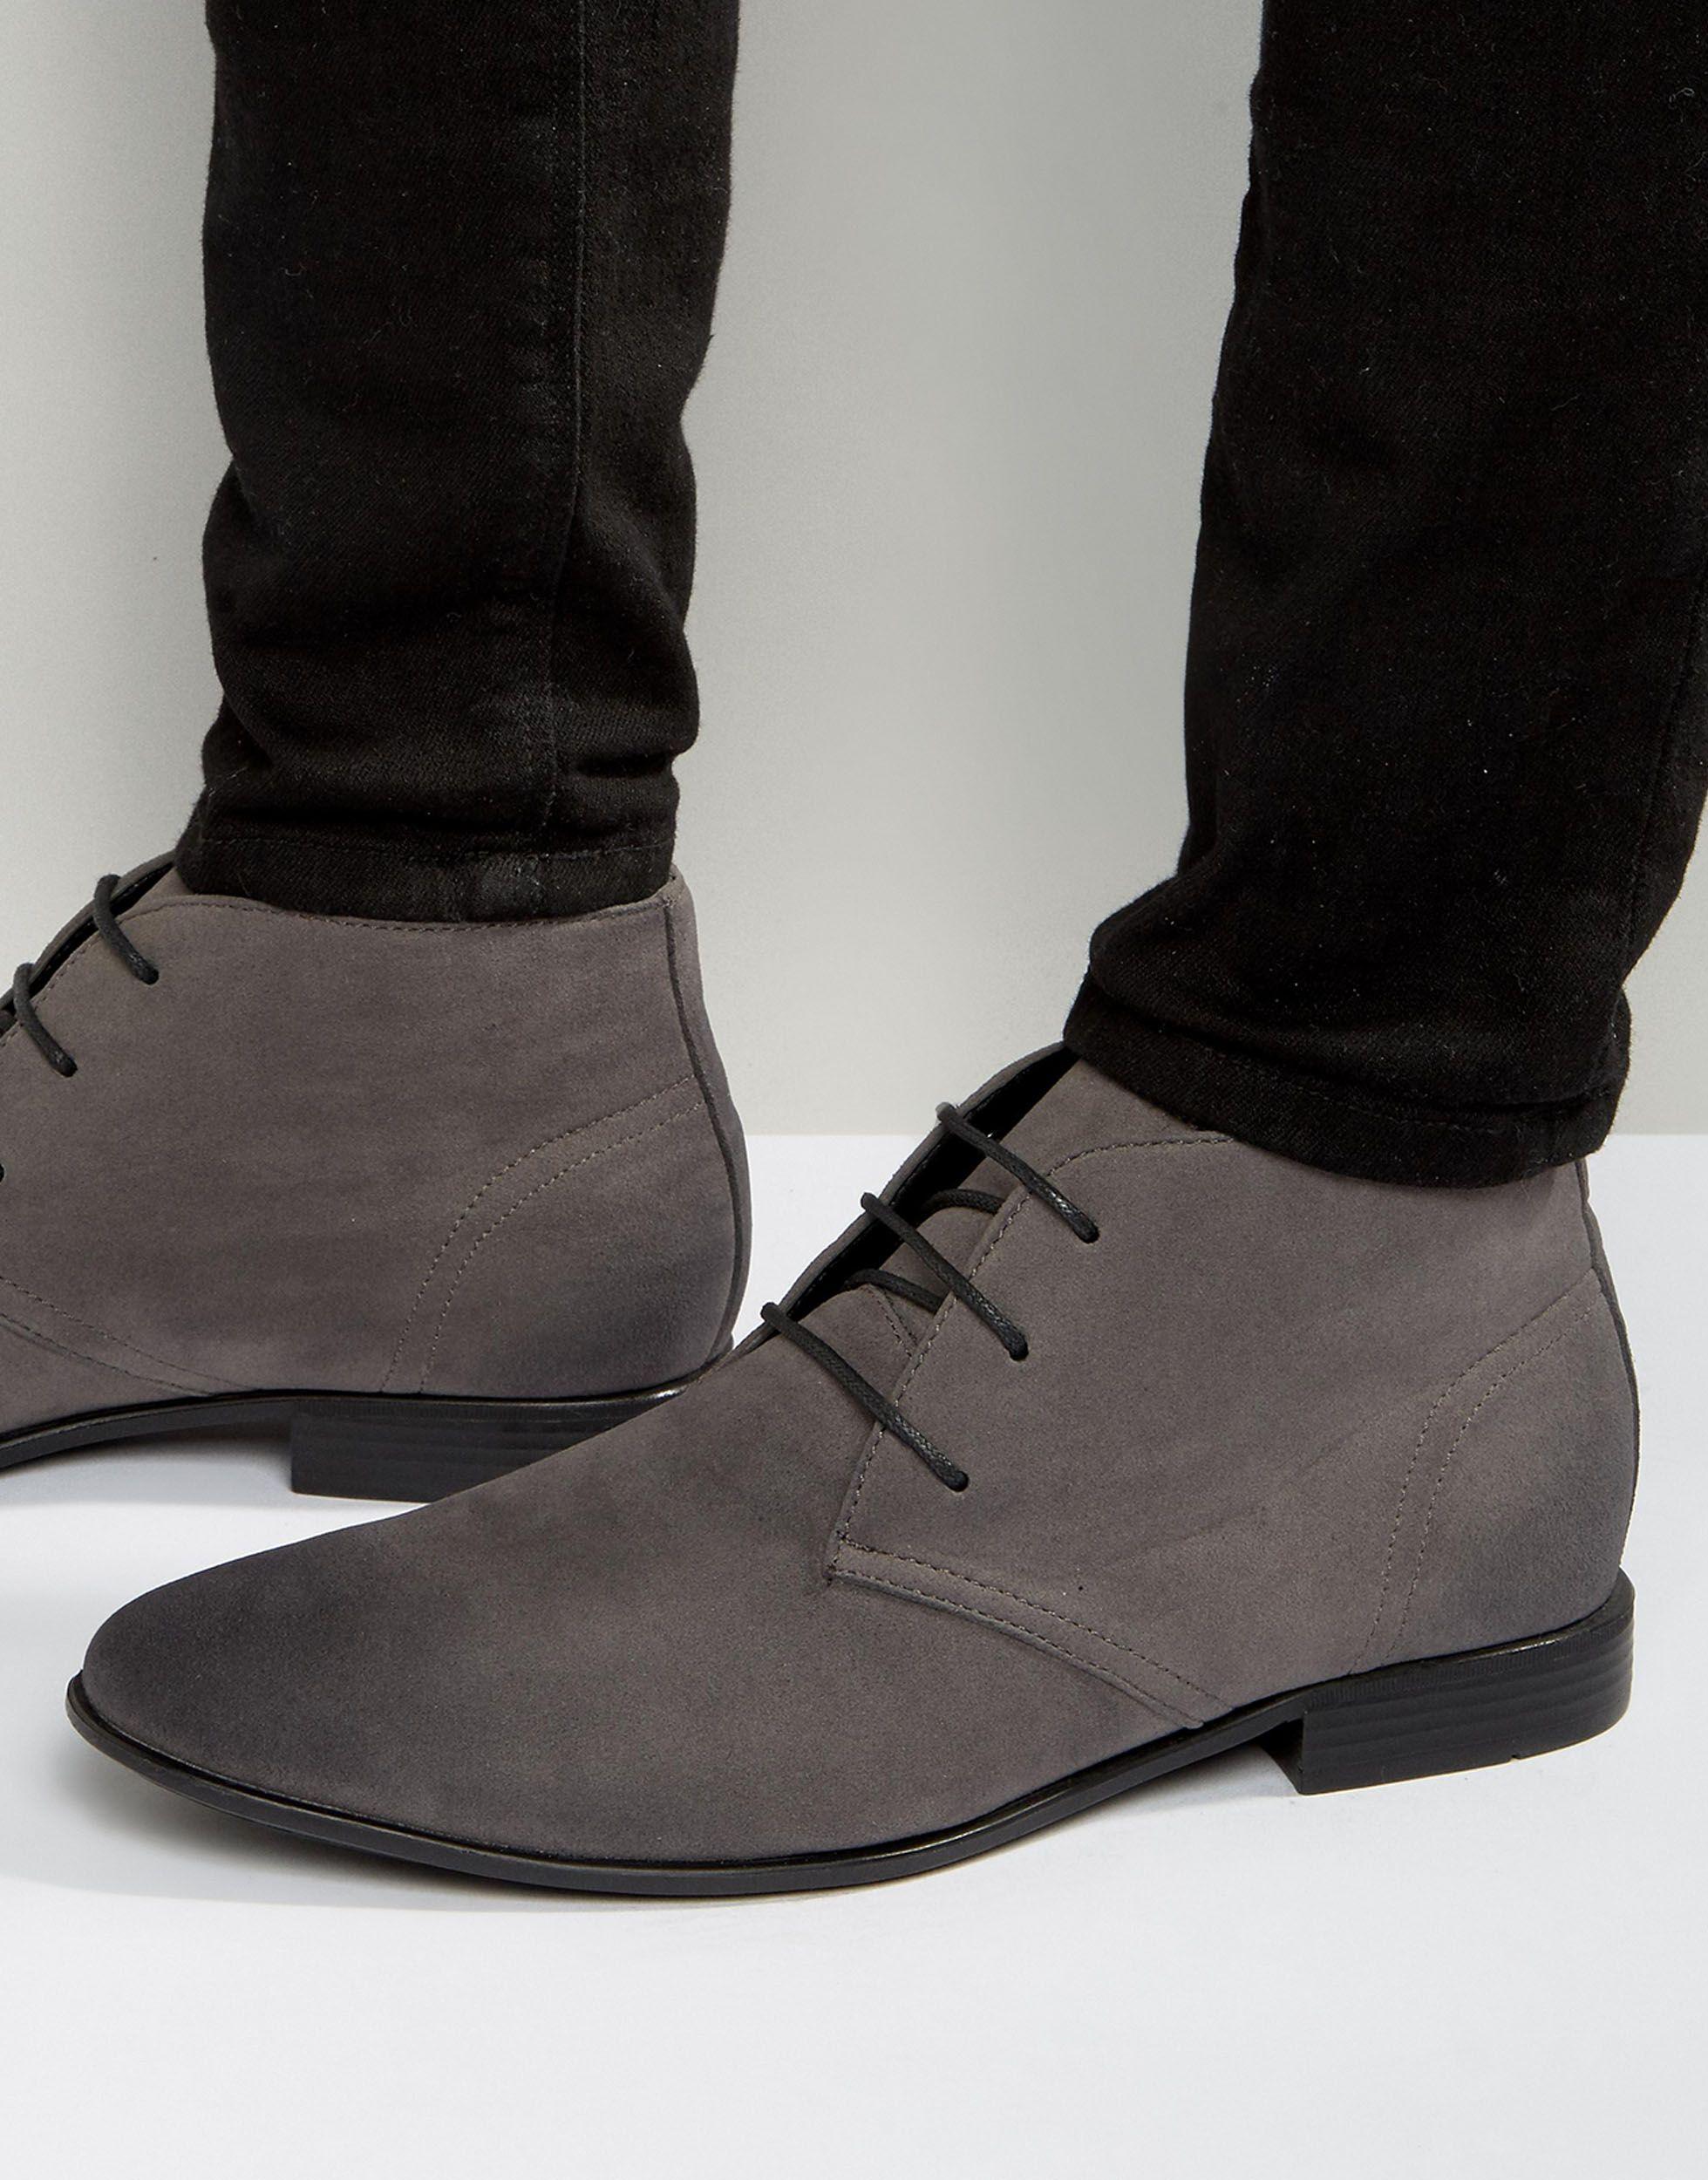 ASOS Chukka Boots in Grey (Gray) for Men - Lyst